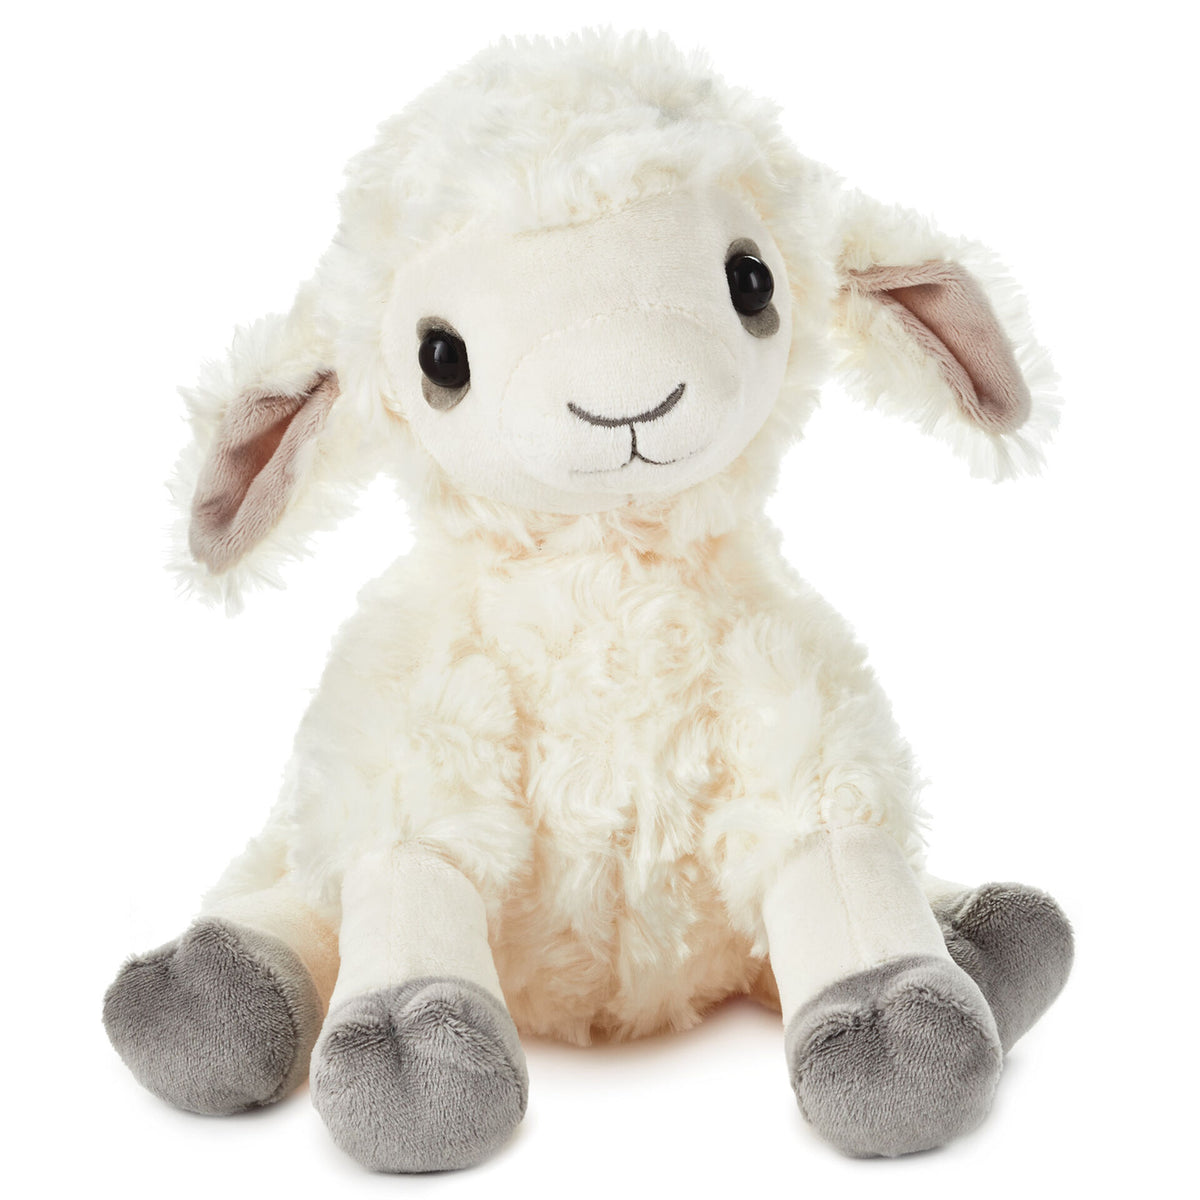 sheep stuffed animal